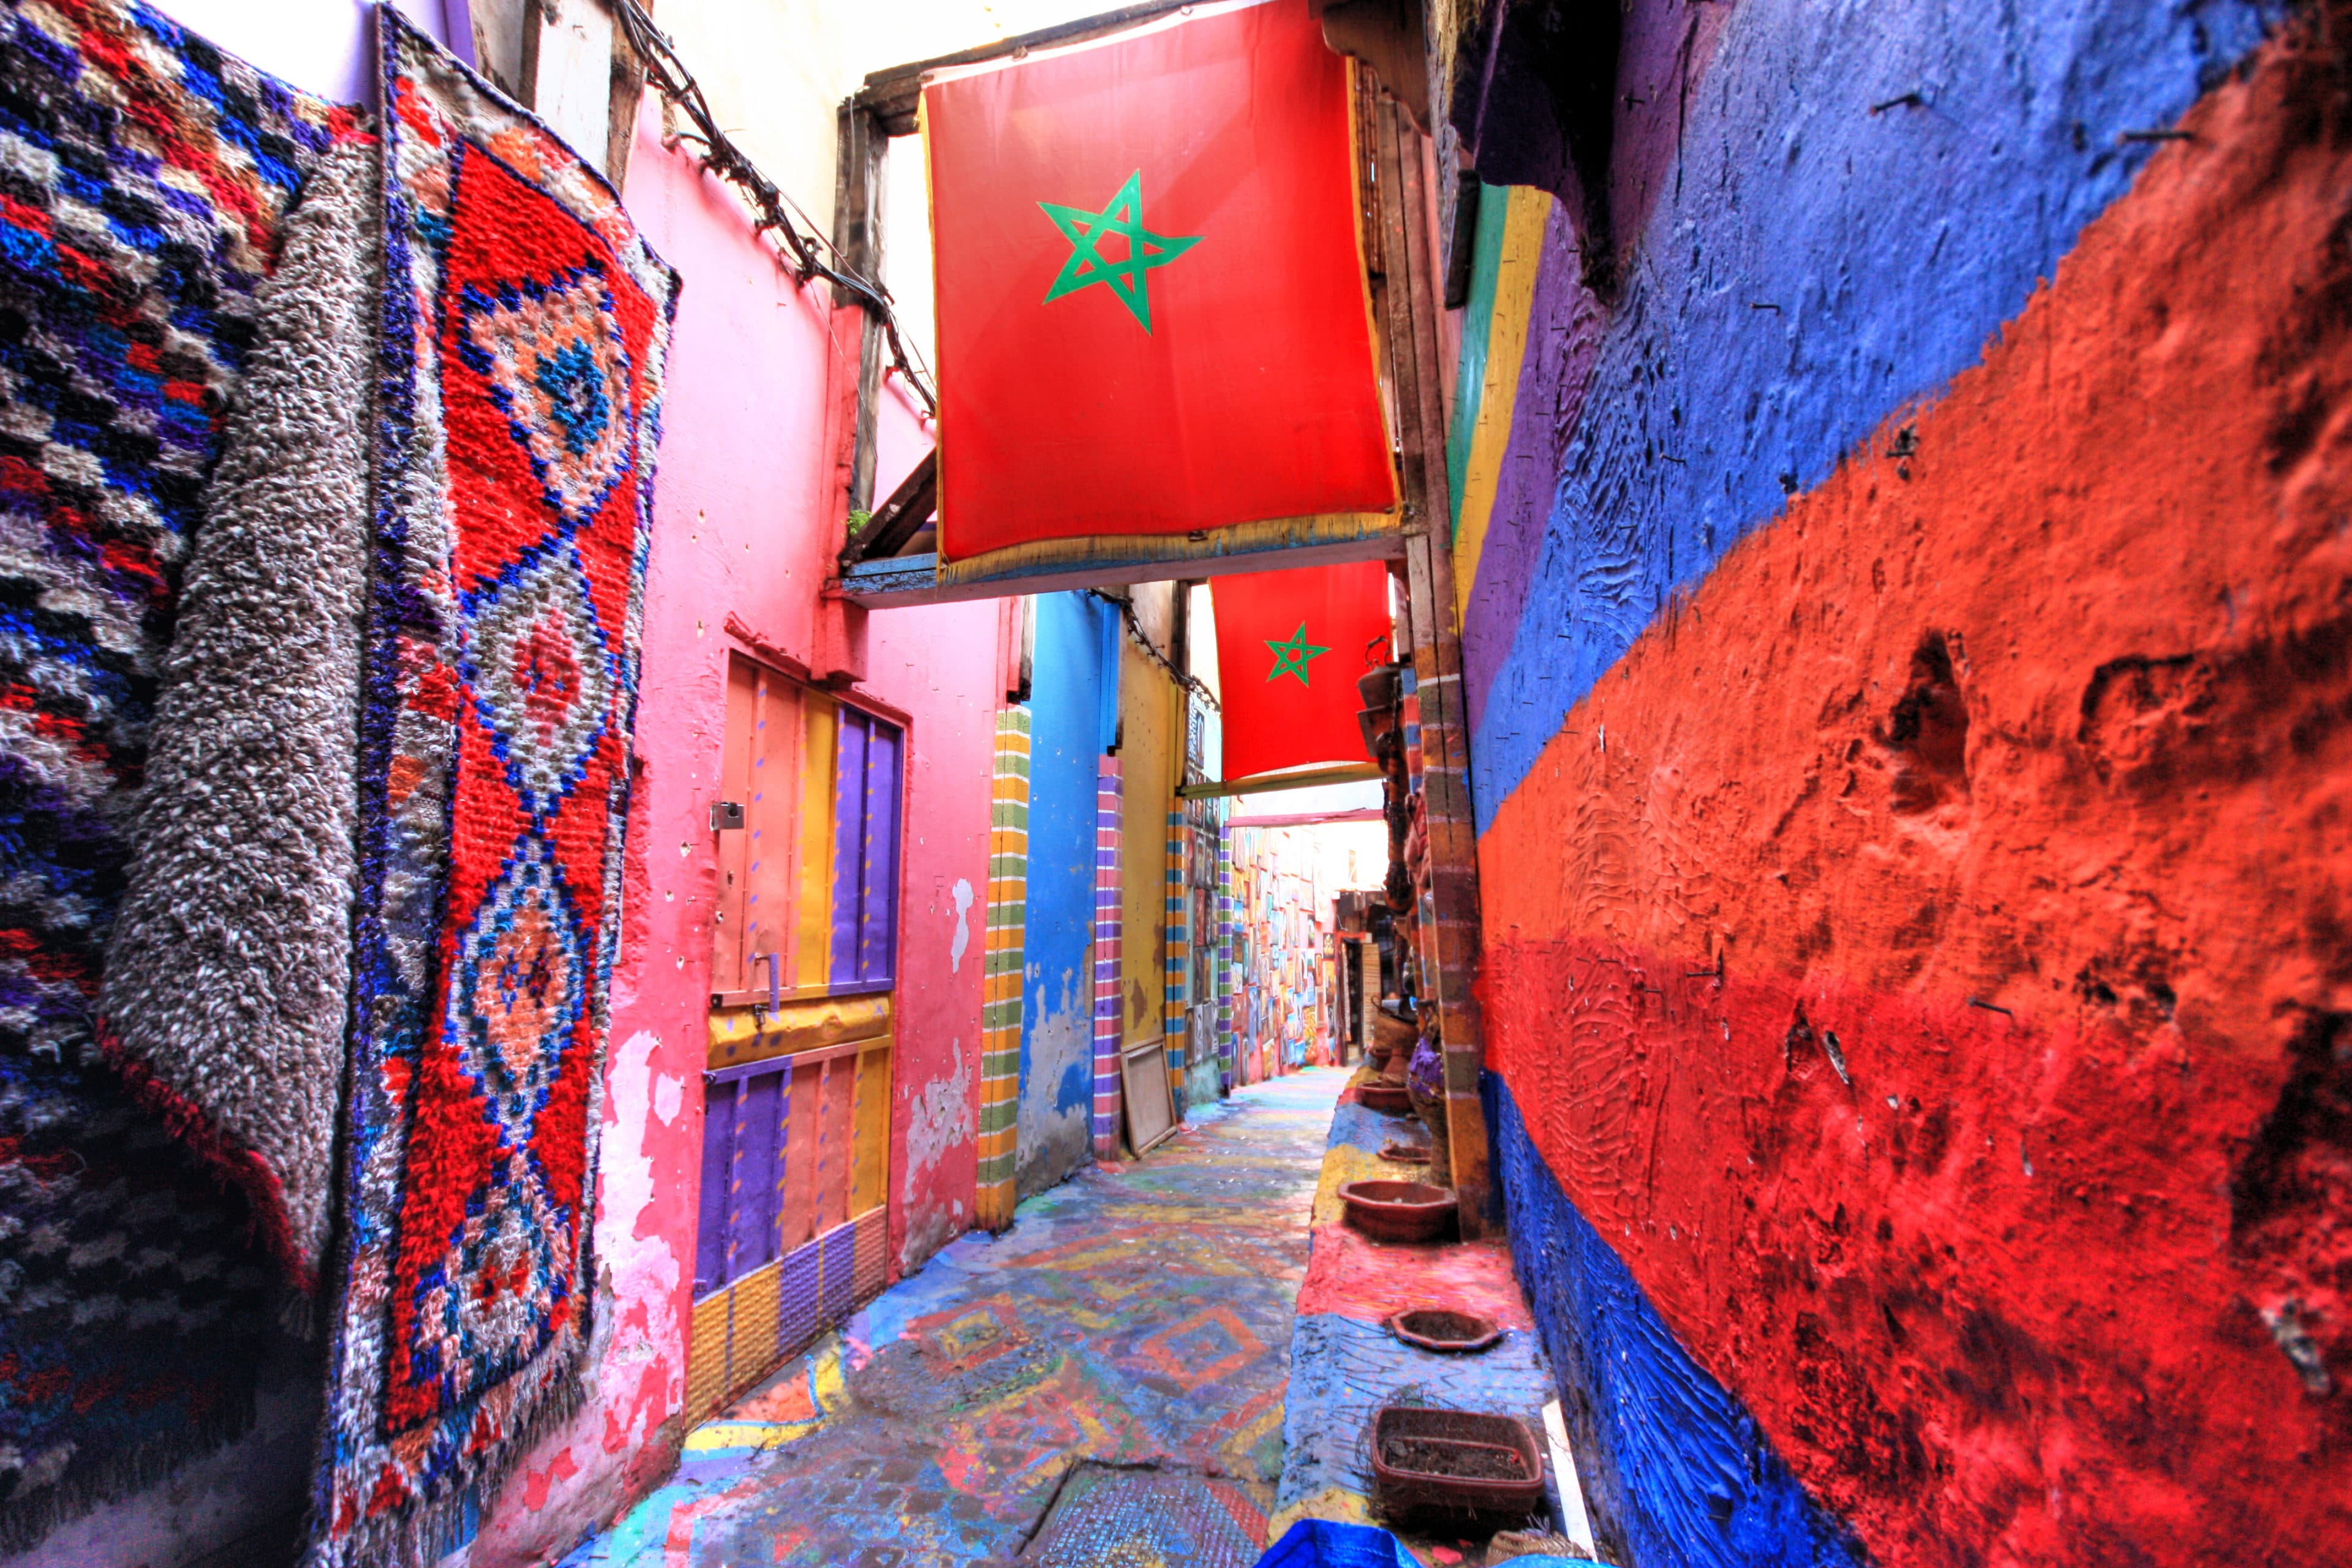 Destination Spotlight: Get Lost in the Magic of Marrakech